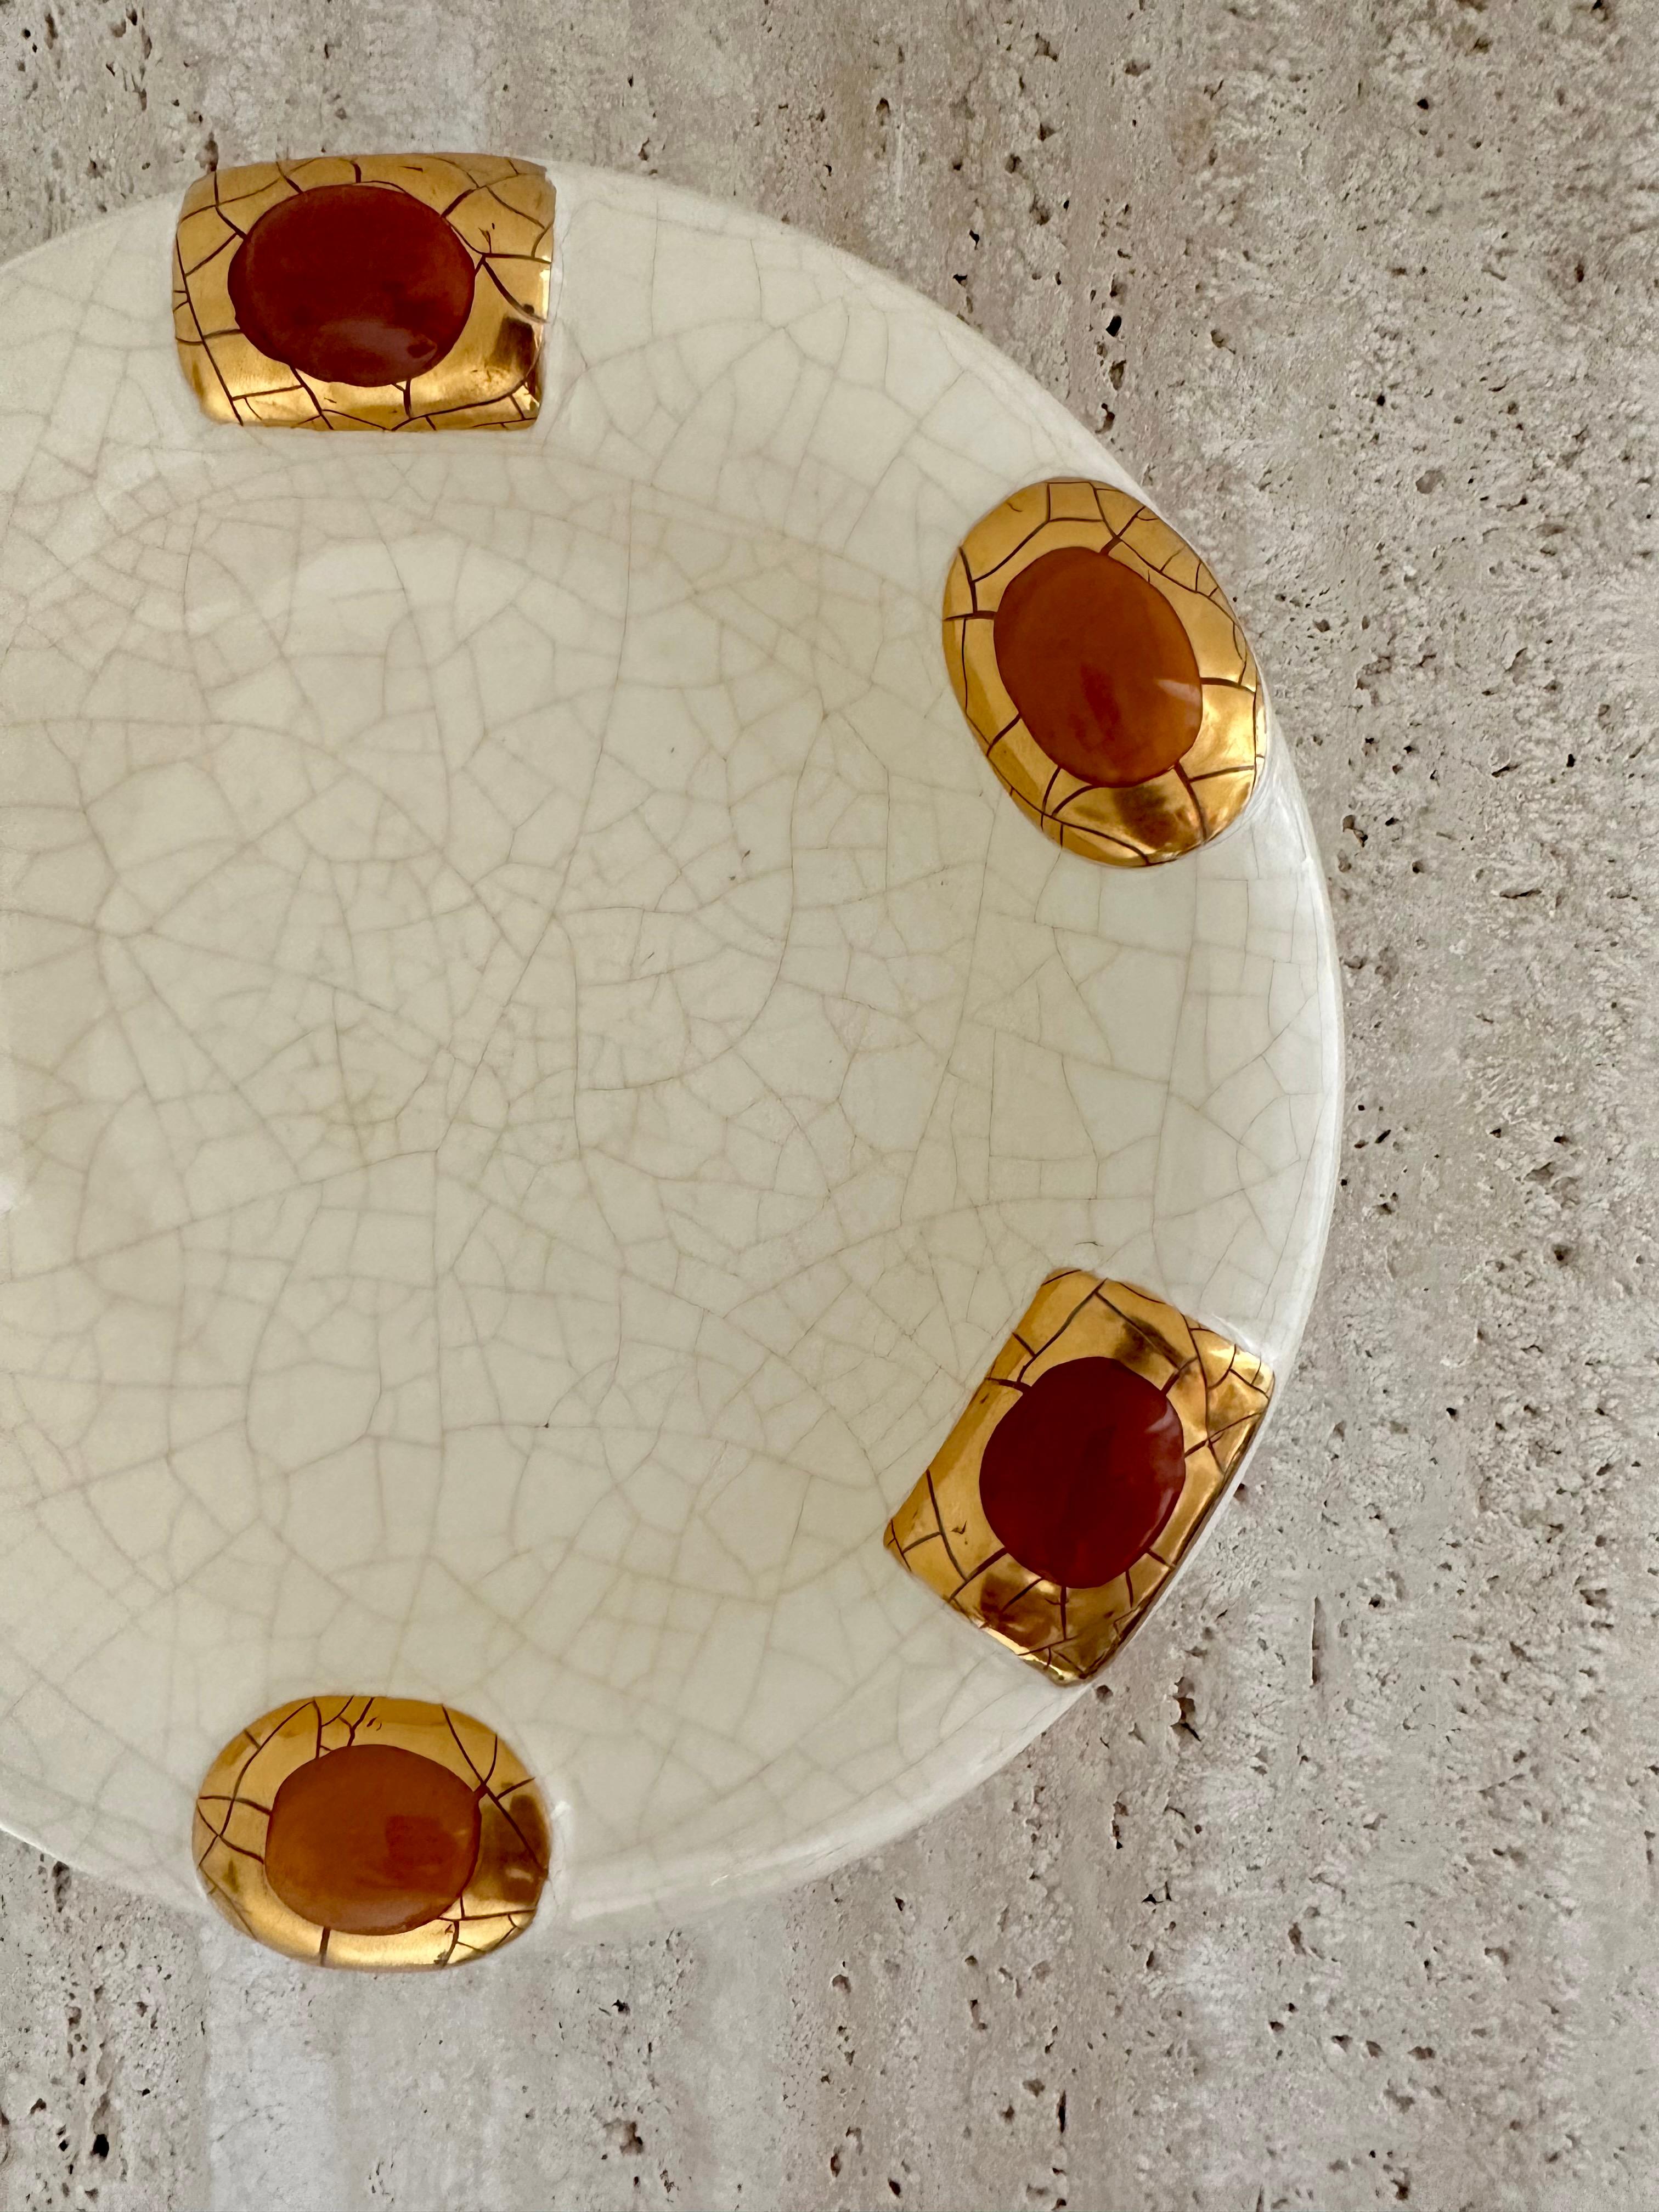 French earthenware crackle glaze dish with enamel decor by Faienceries de Longwy 1